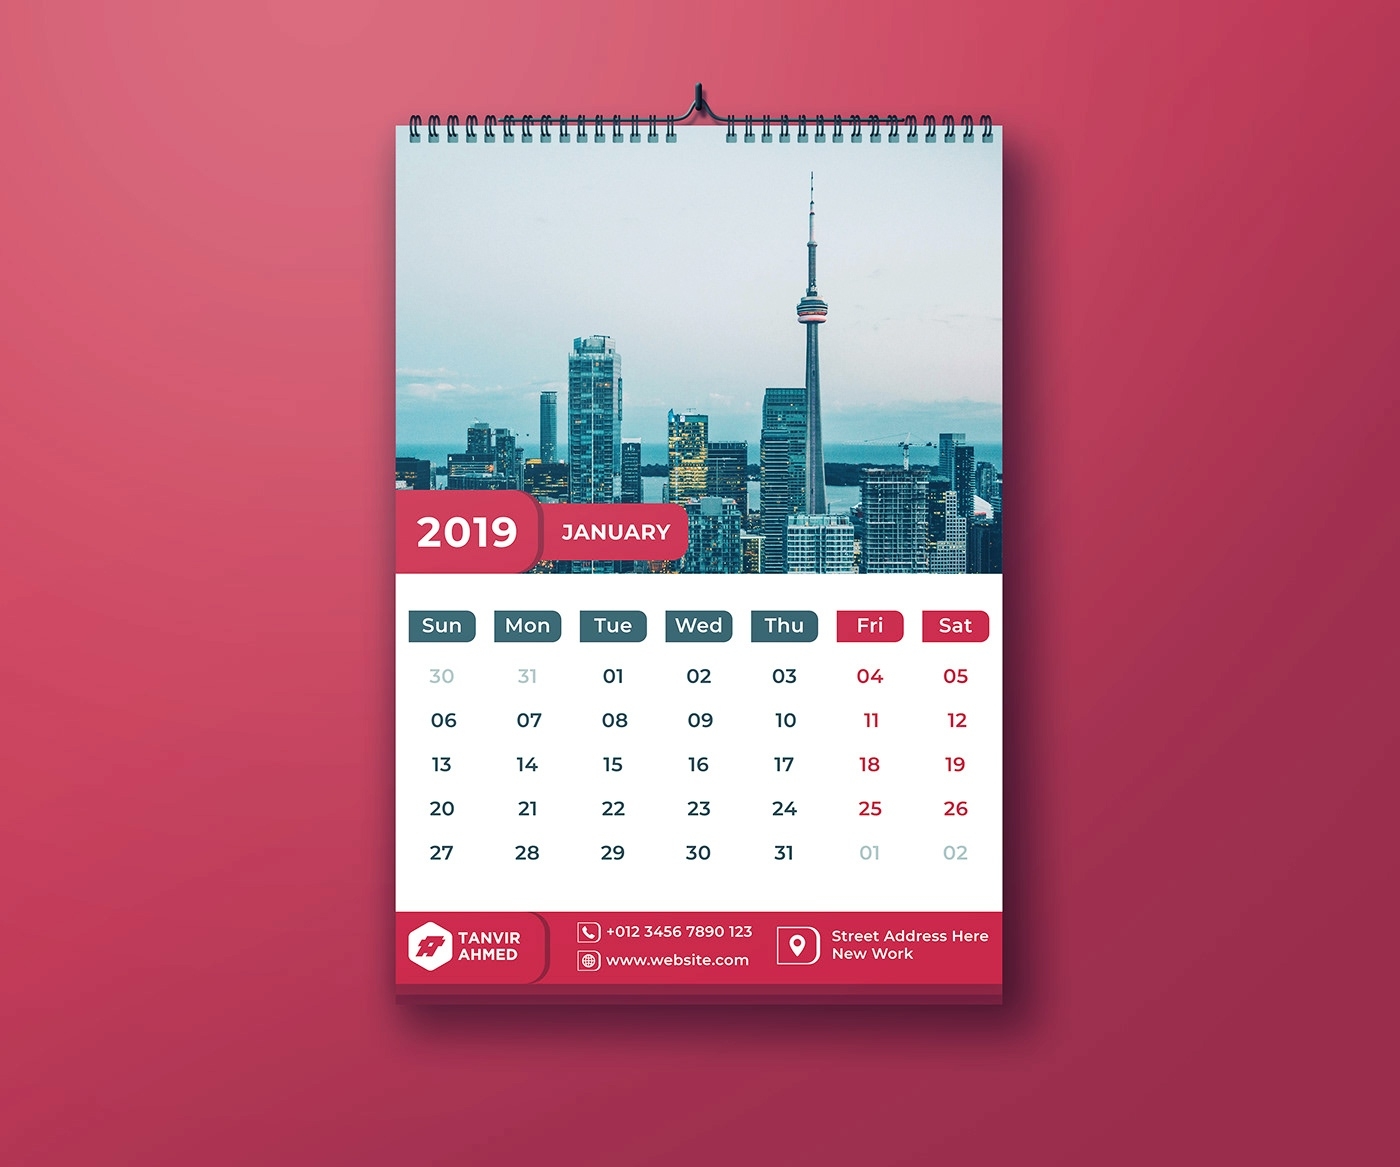 Wall Calendar 2019 | Free Psd Template | Psd Repo Calendar Template For Photoshop